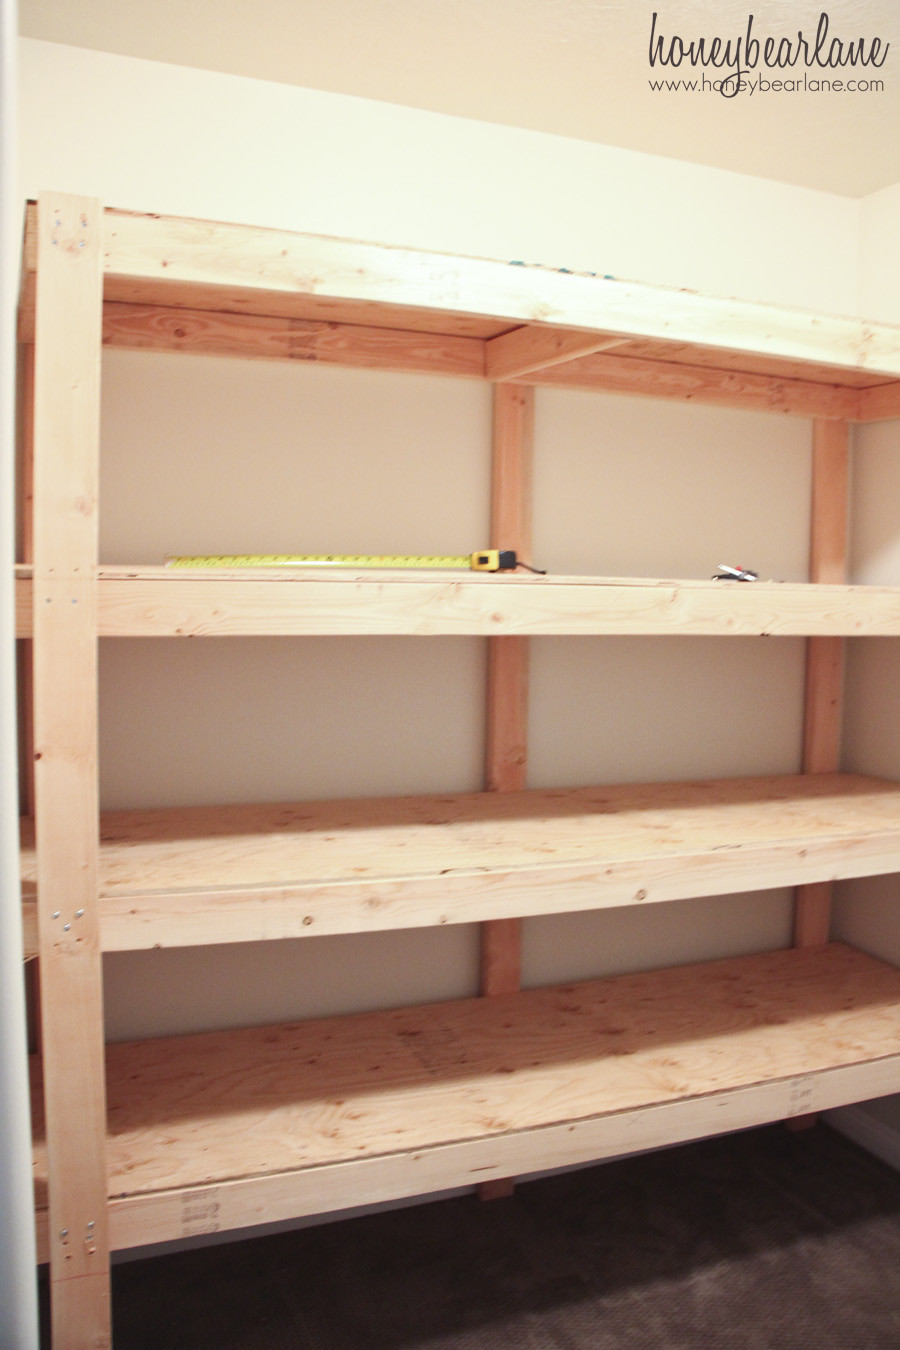 Best ideas about Storage Shelves For Garage
. Save or Pin DIY Storage Shelves HoneyBear Lane Now.